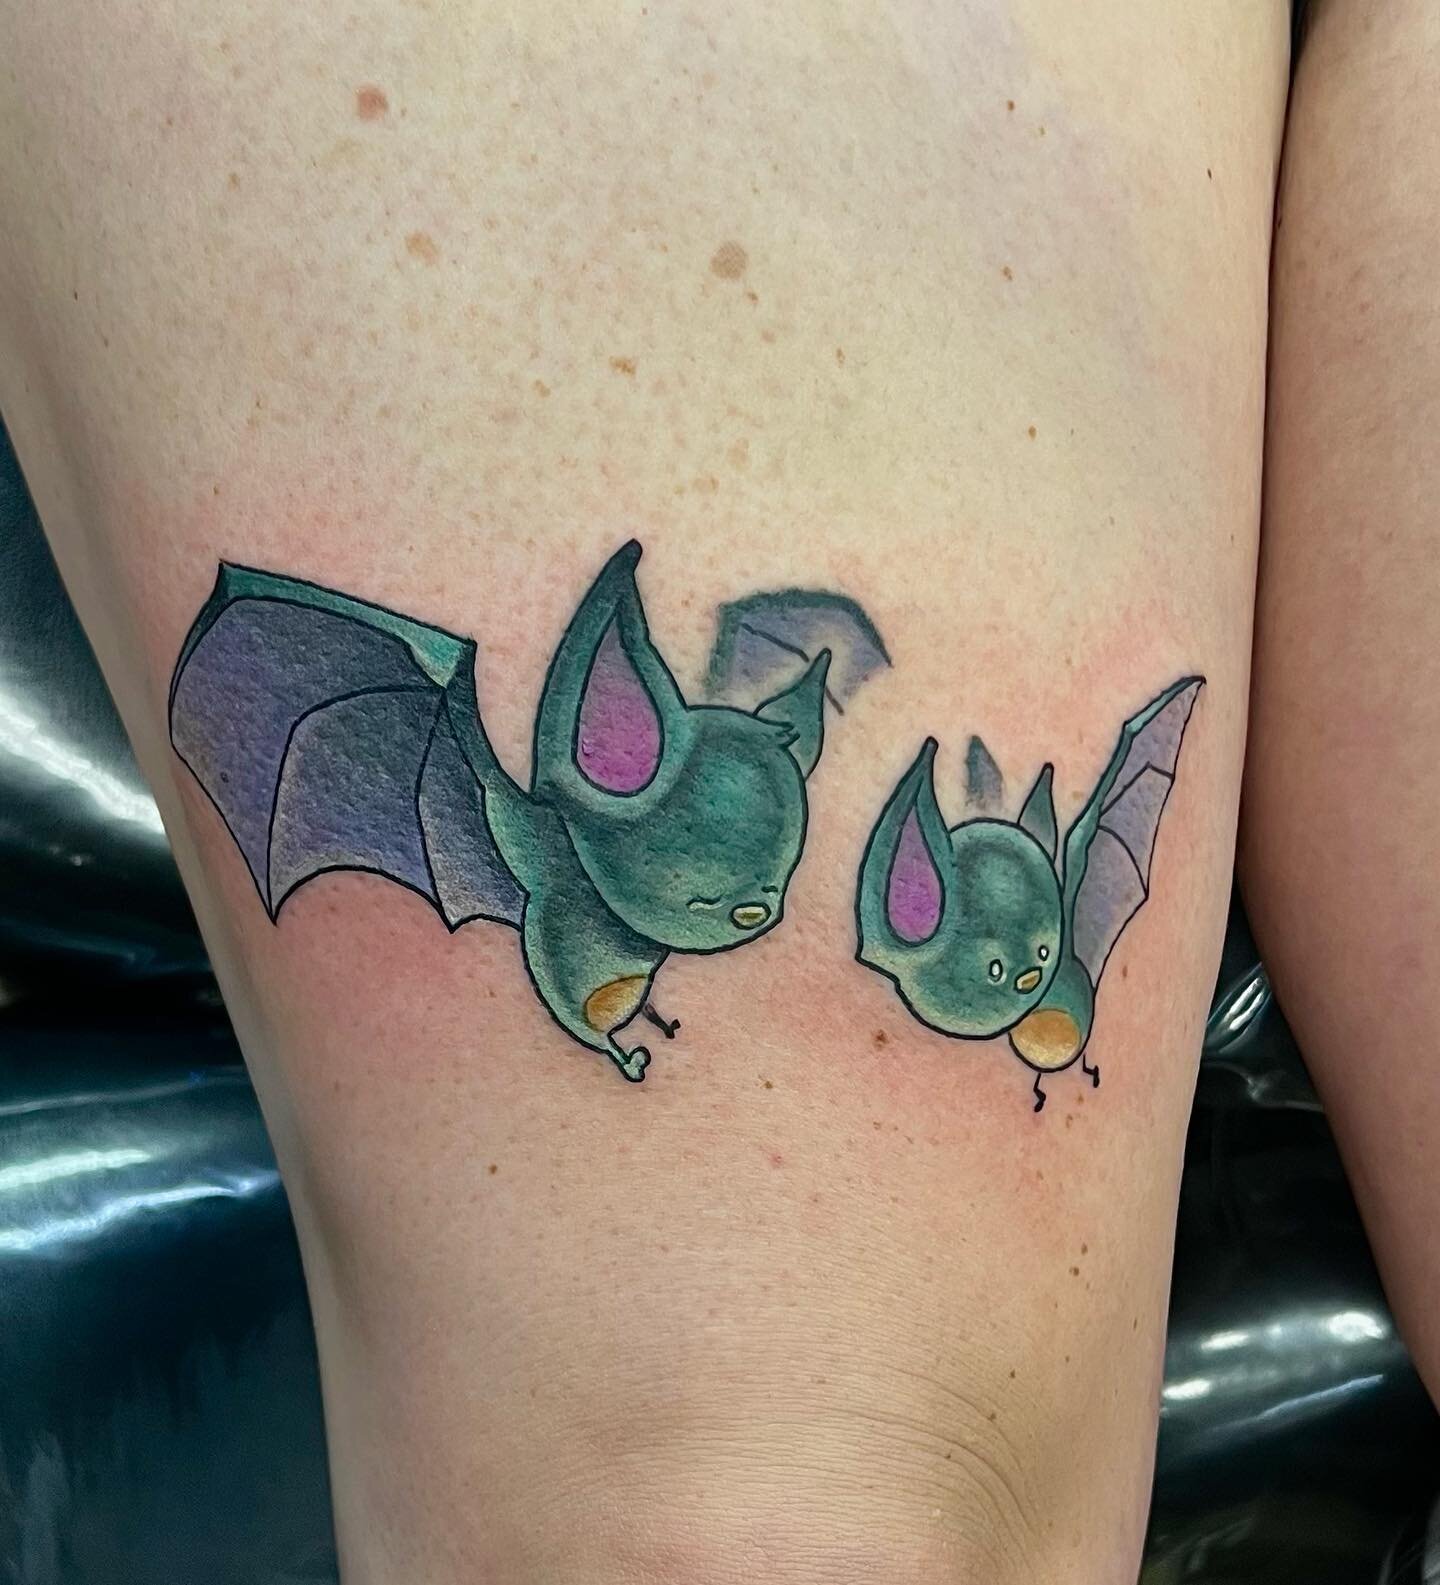 Check out these sick little green bat tattoos! 🦇💚 

#bats #battattoo #spooky #chicago